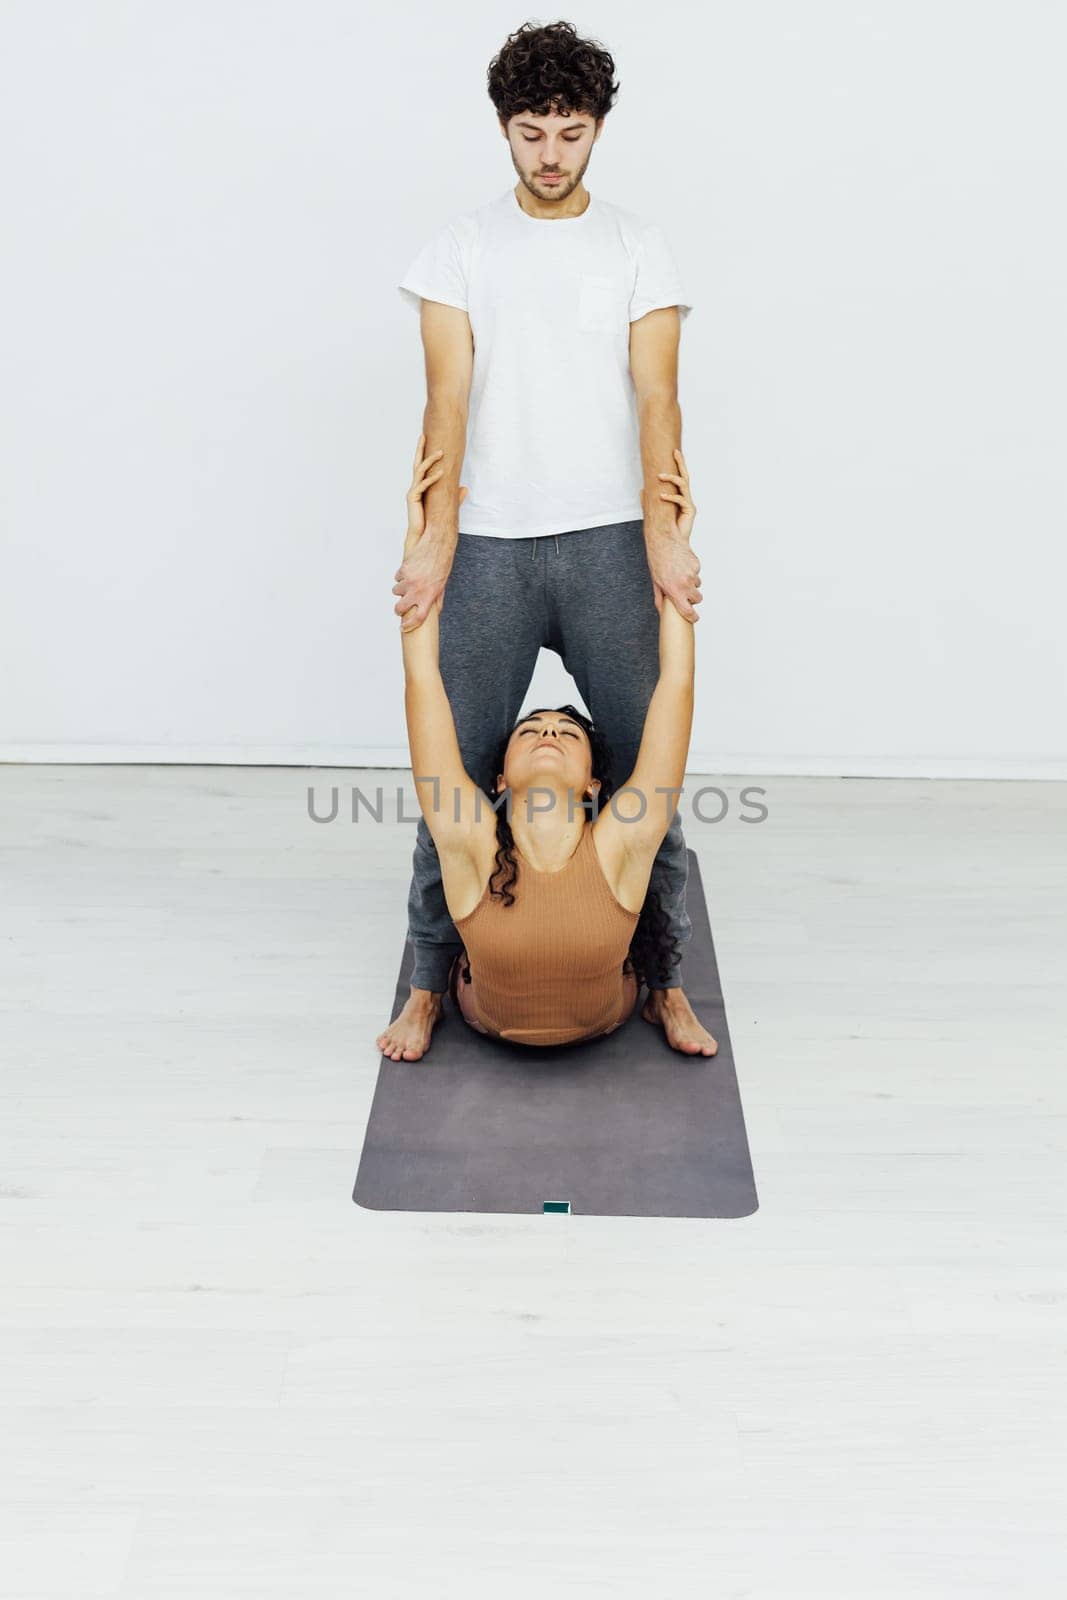 acrobatics yoga poses woman and man do gymnastics warm-up exercises asana flexible body by Simakov